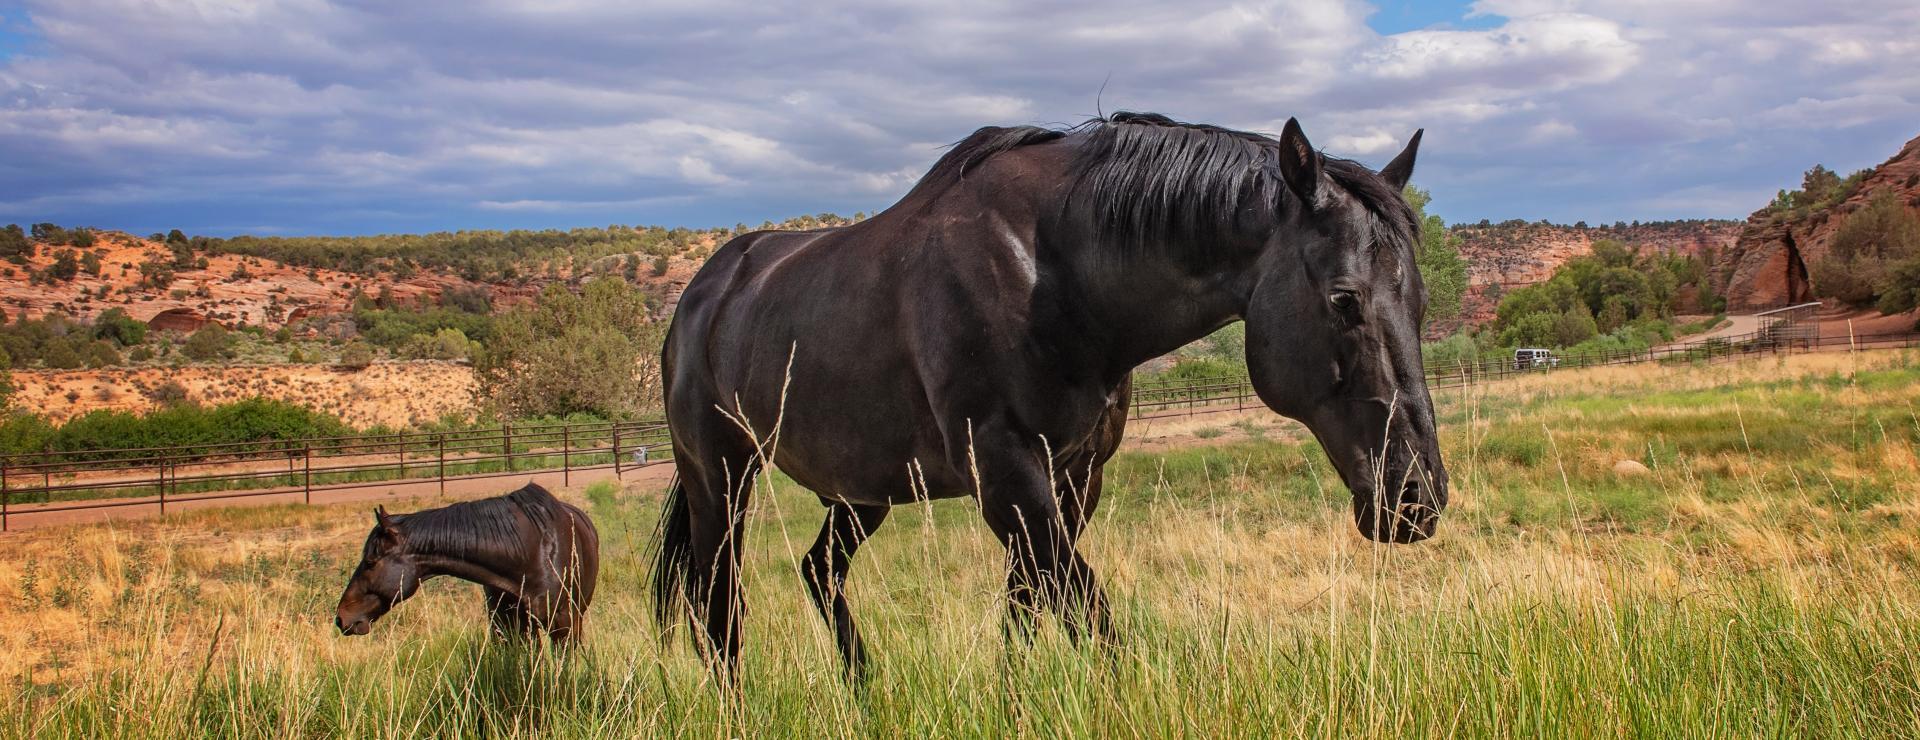 Horse in pasture in Utah desert